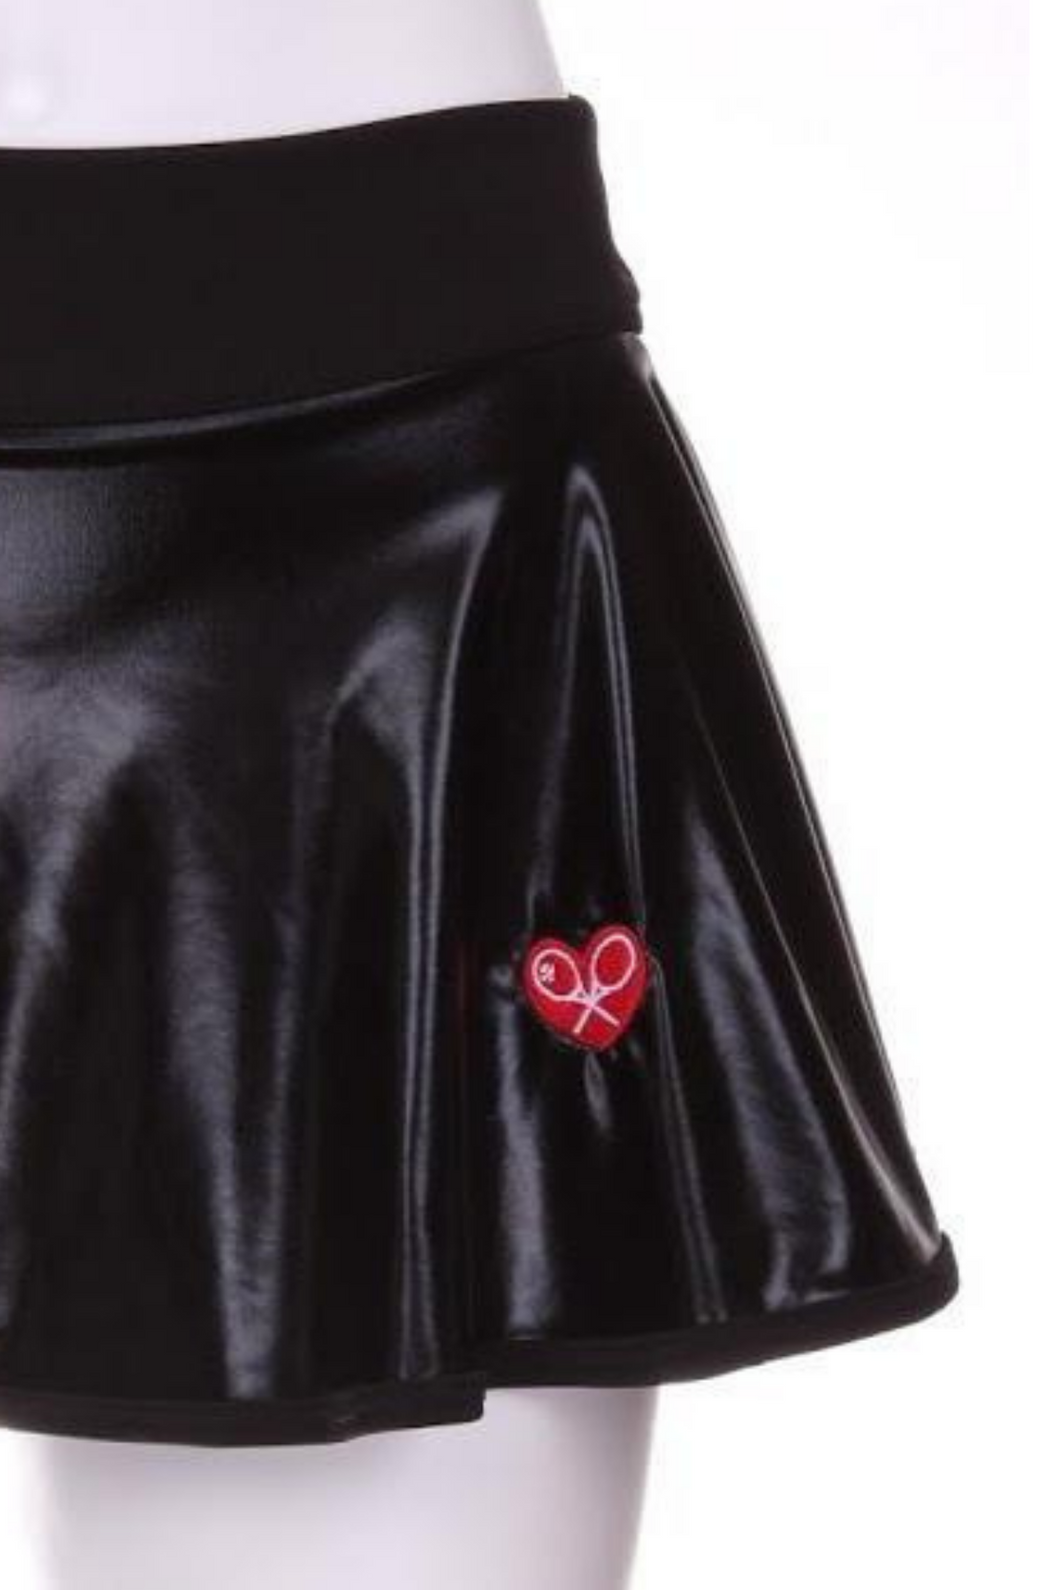 Pleather Black Tennis LOVE “O” Skirt - I LOVE MY DOUBLES PARTNER!!!